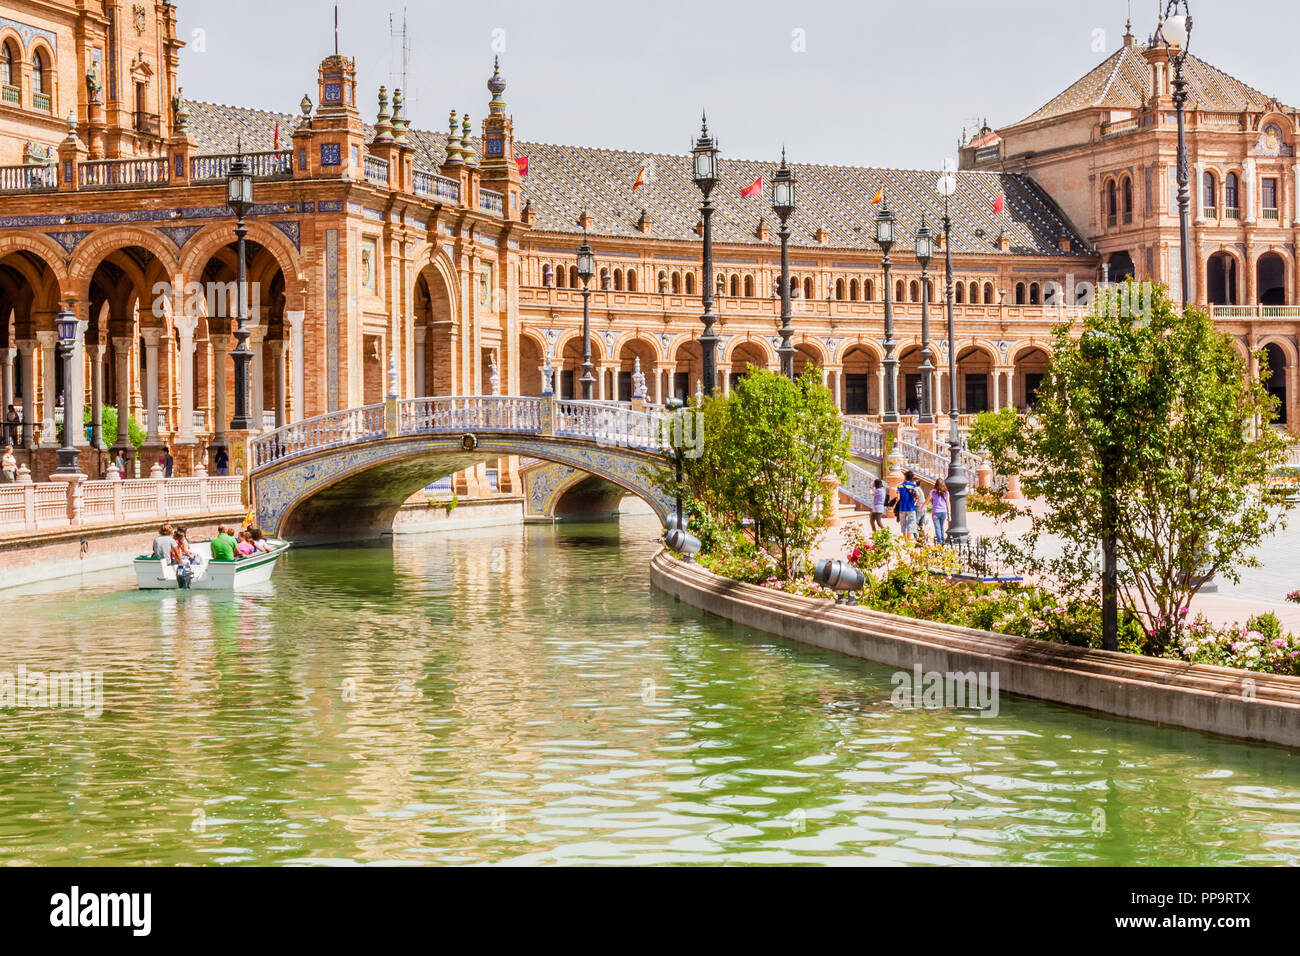 Blick auf den Kanal und palastartigen Gebäude an der Plaza de Espana, Sevilla, Spanien. Stockfoto